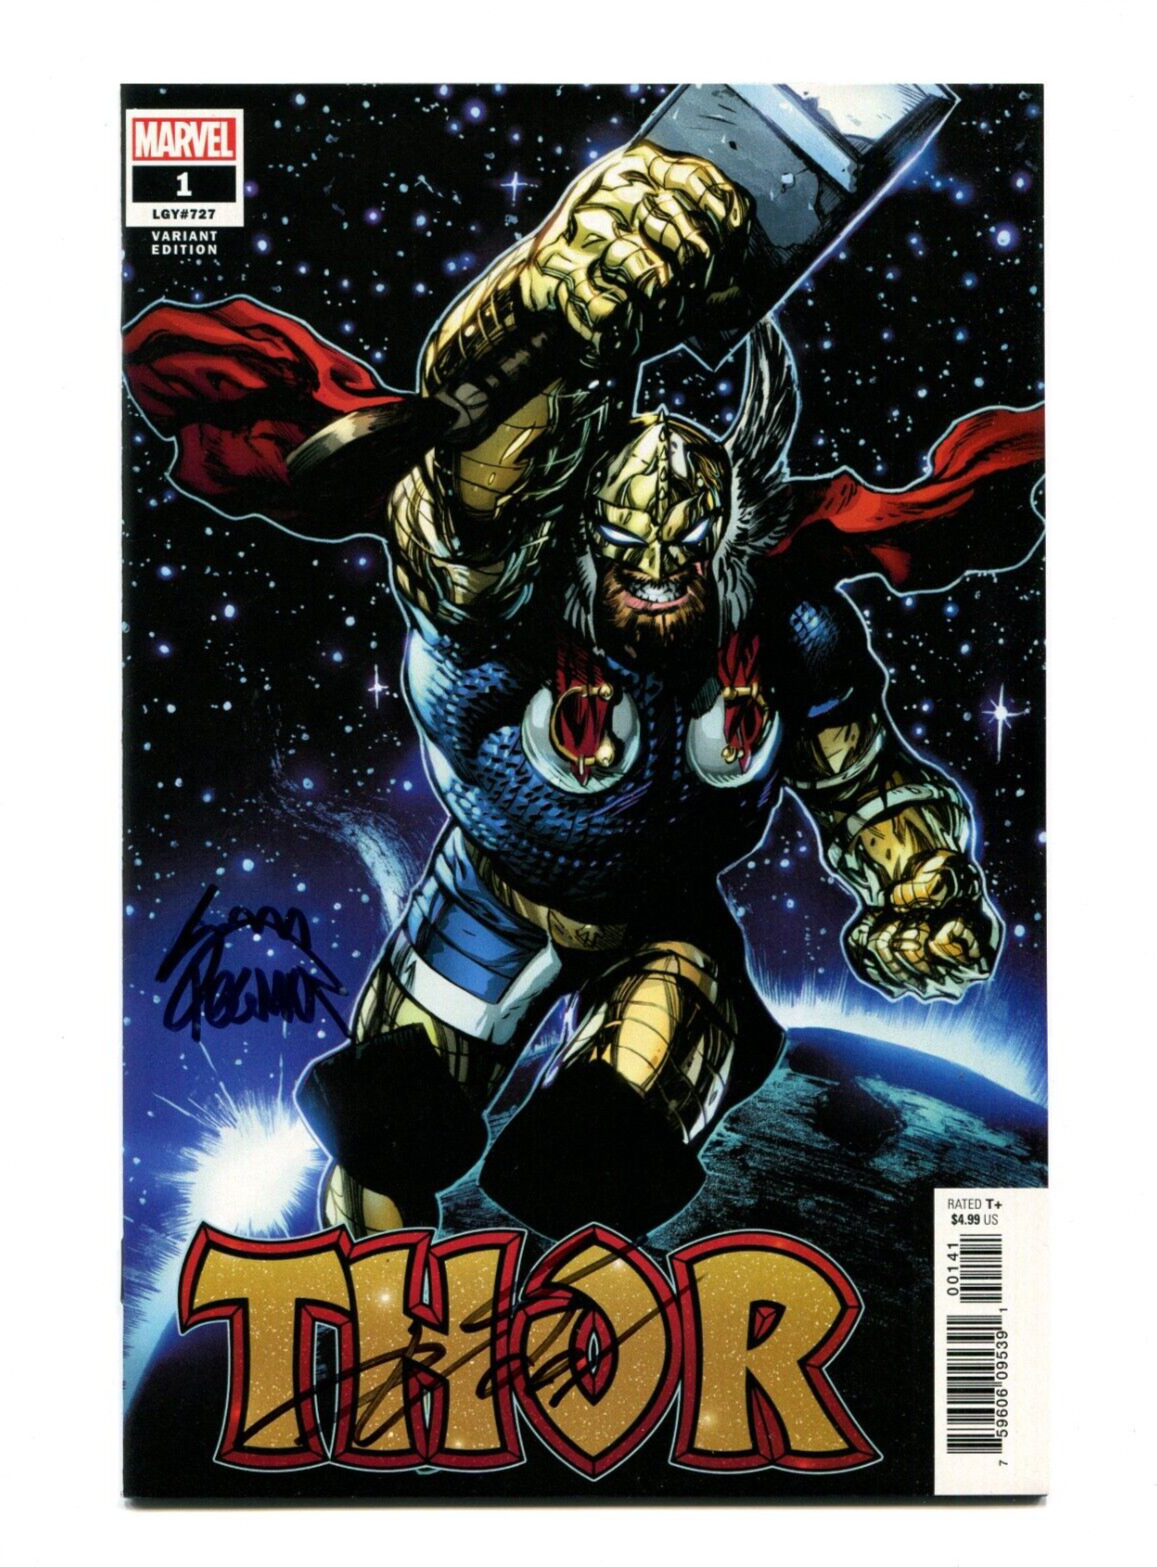 Thor #1 LGY#727- 1:50 Variant Signed Ryan Stegman + Donny Cates w/COA (9.2) 2020